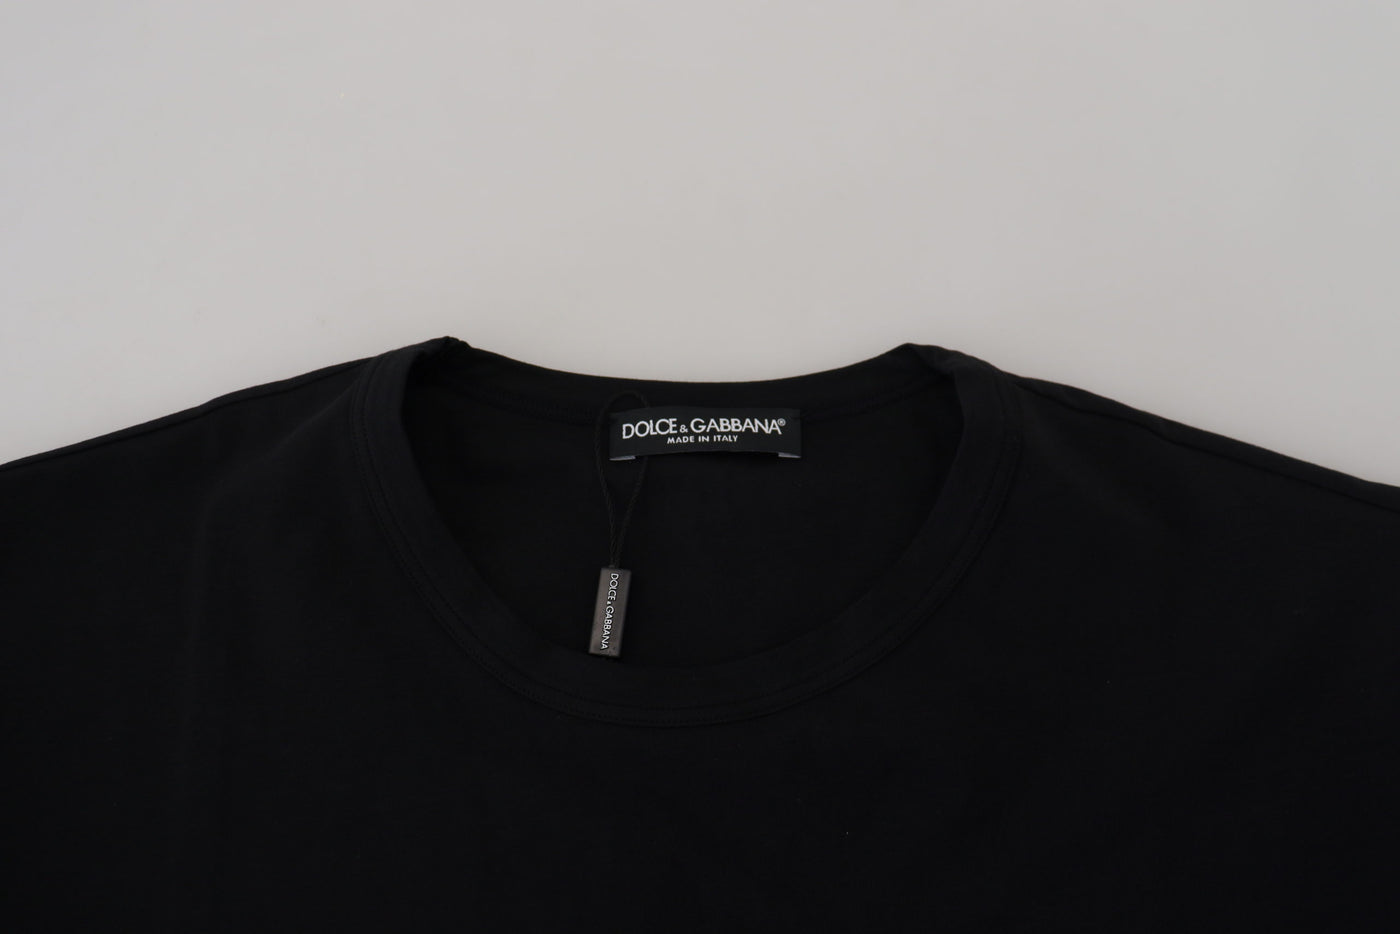 Black Short Sleeves Round Neck T-shirt